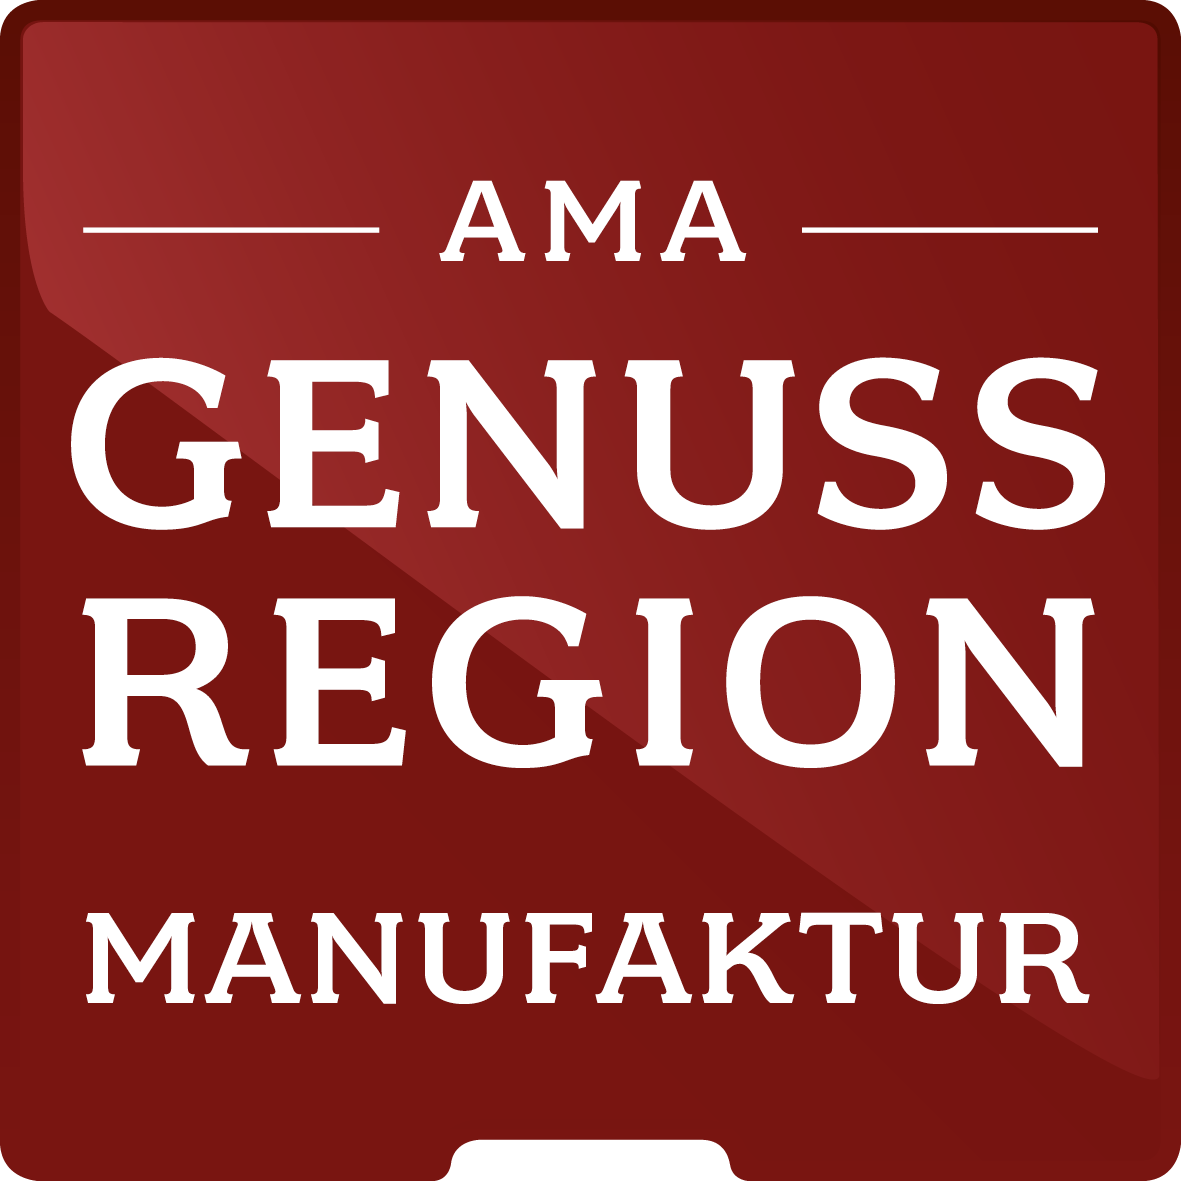 LOGO AMA Genuss Region Manufaktur